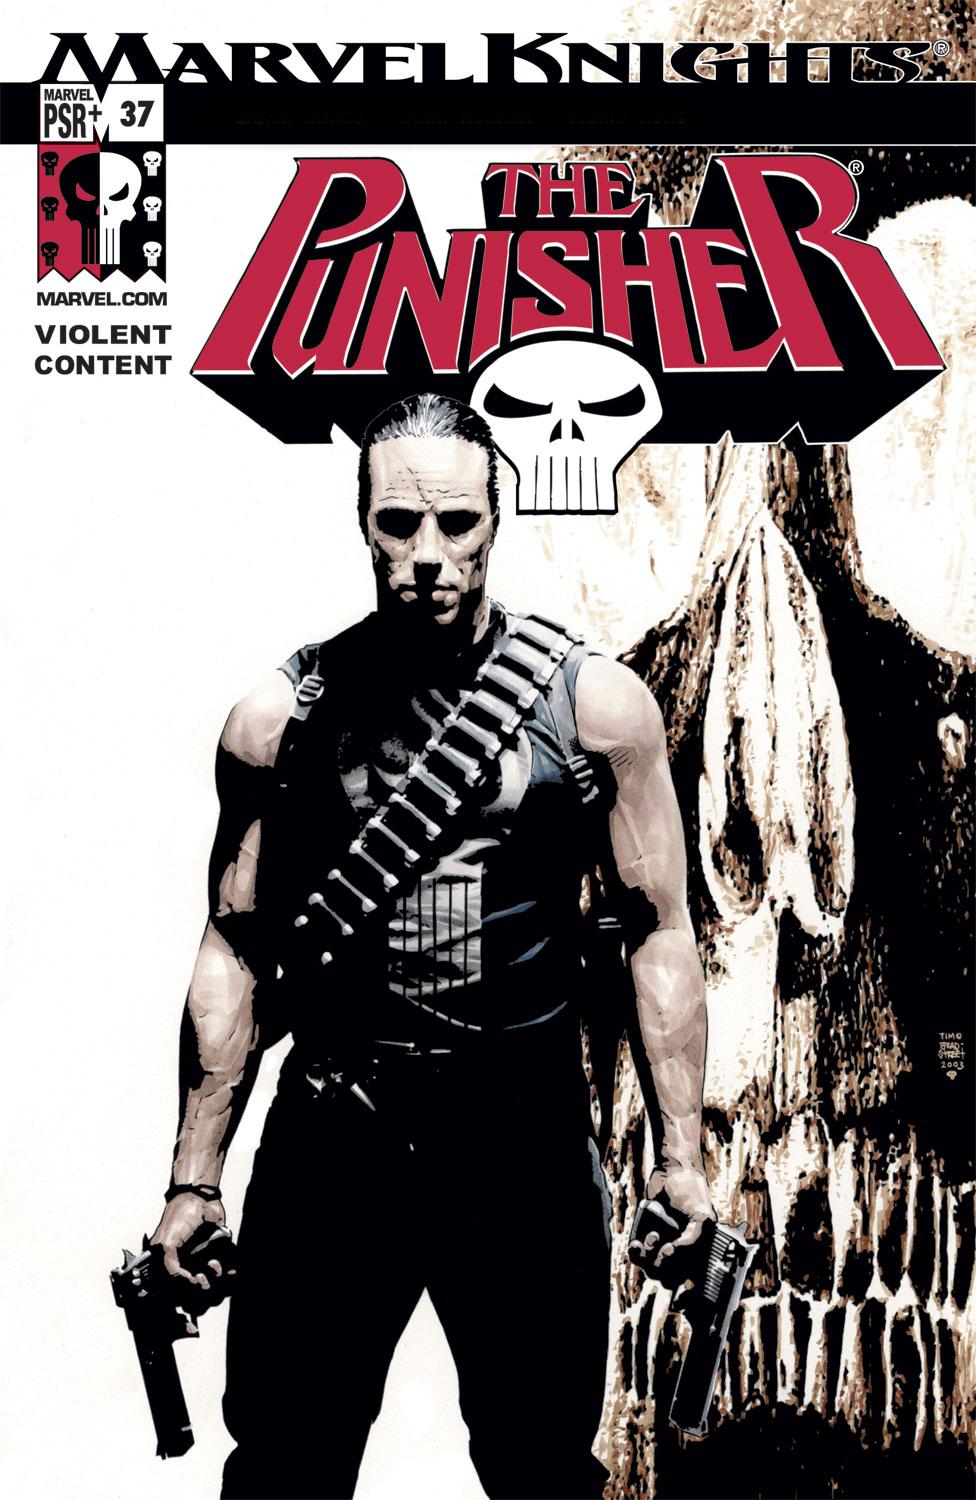 The Punisher (2001 series) - Wikipedia